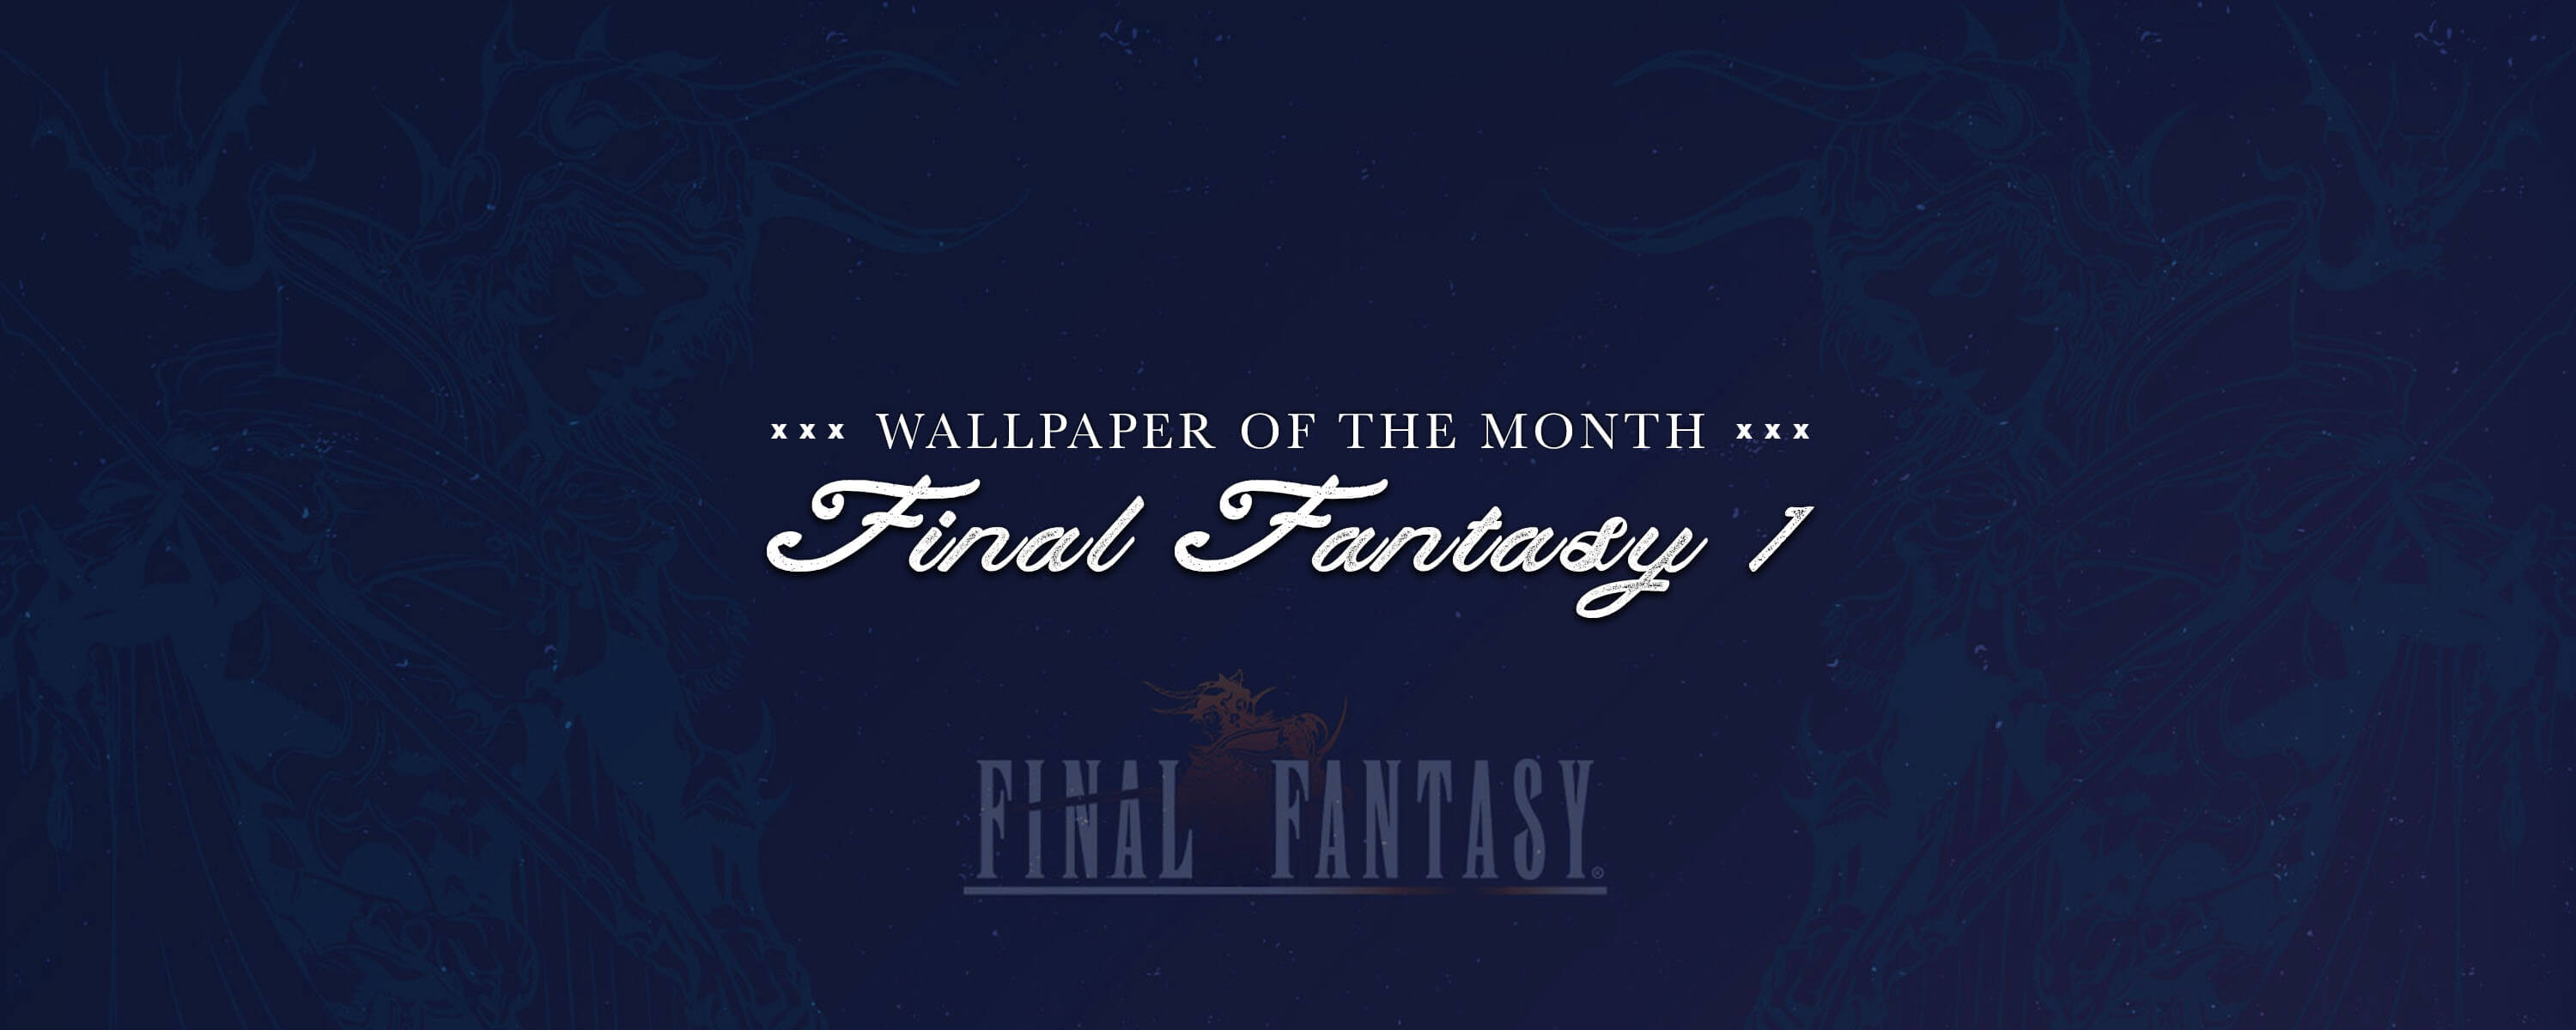 Final Fantasy XIII-2 logo by eldi13 on DeviantArt